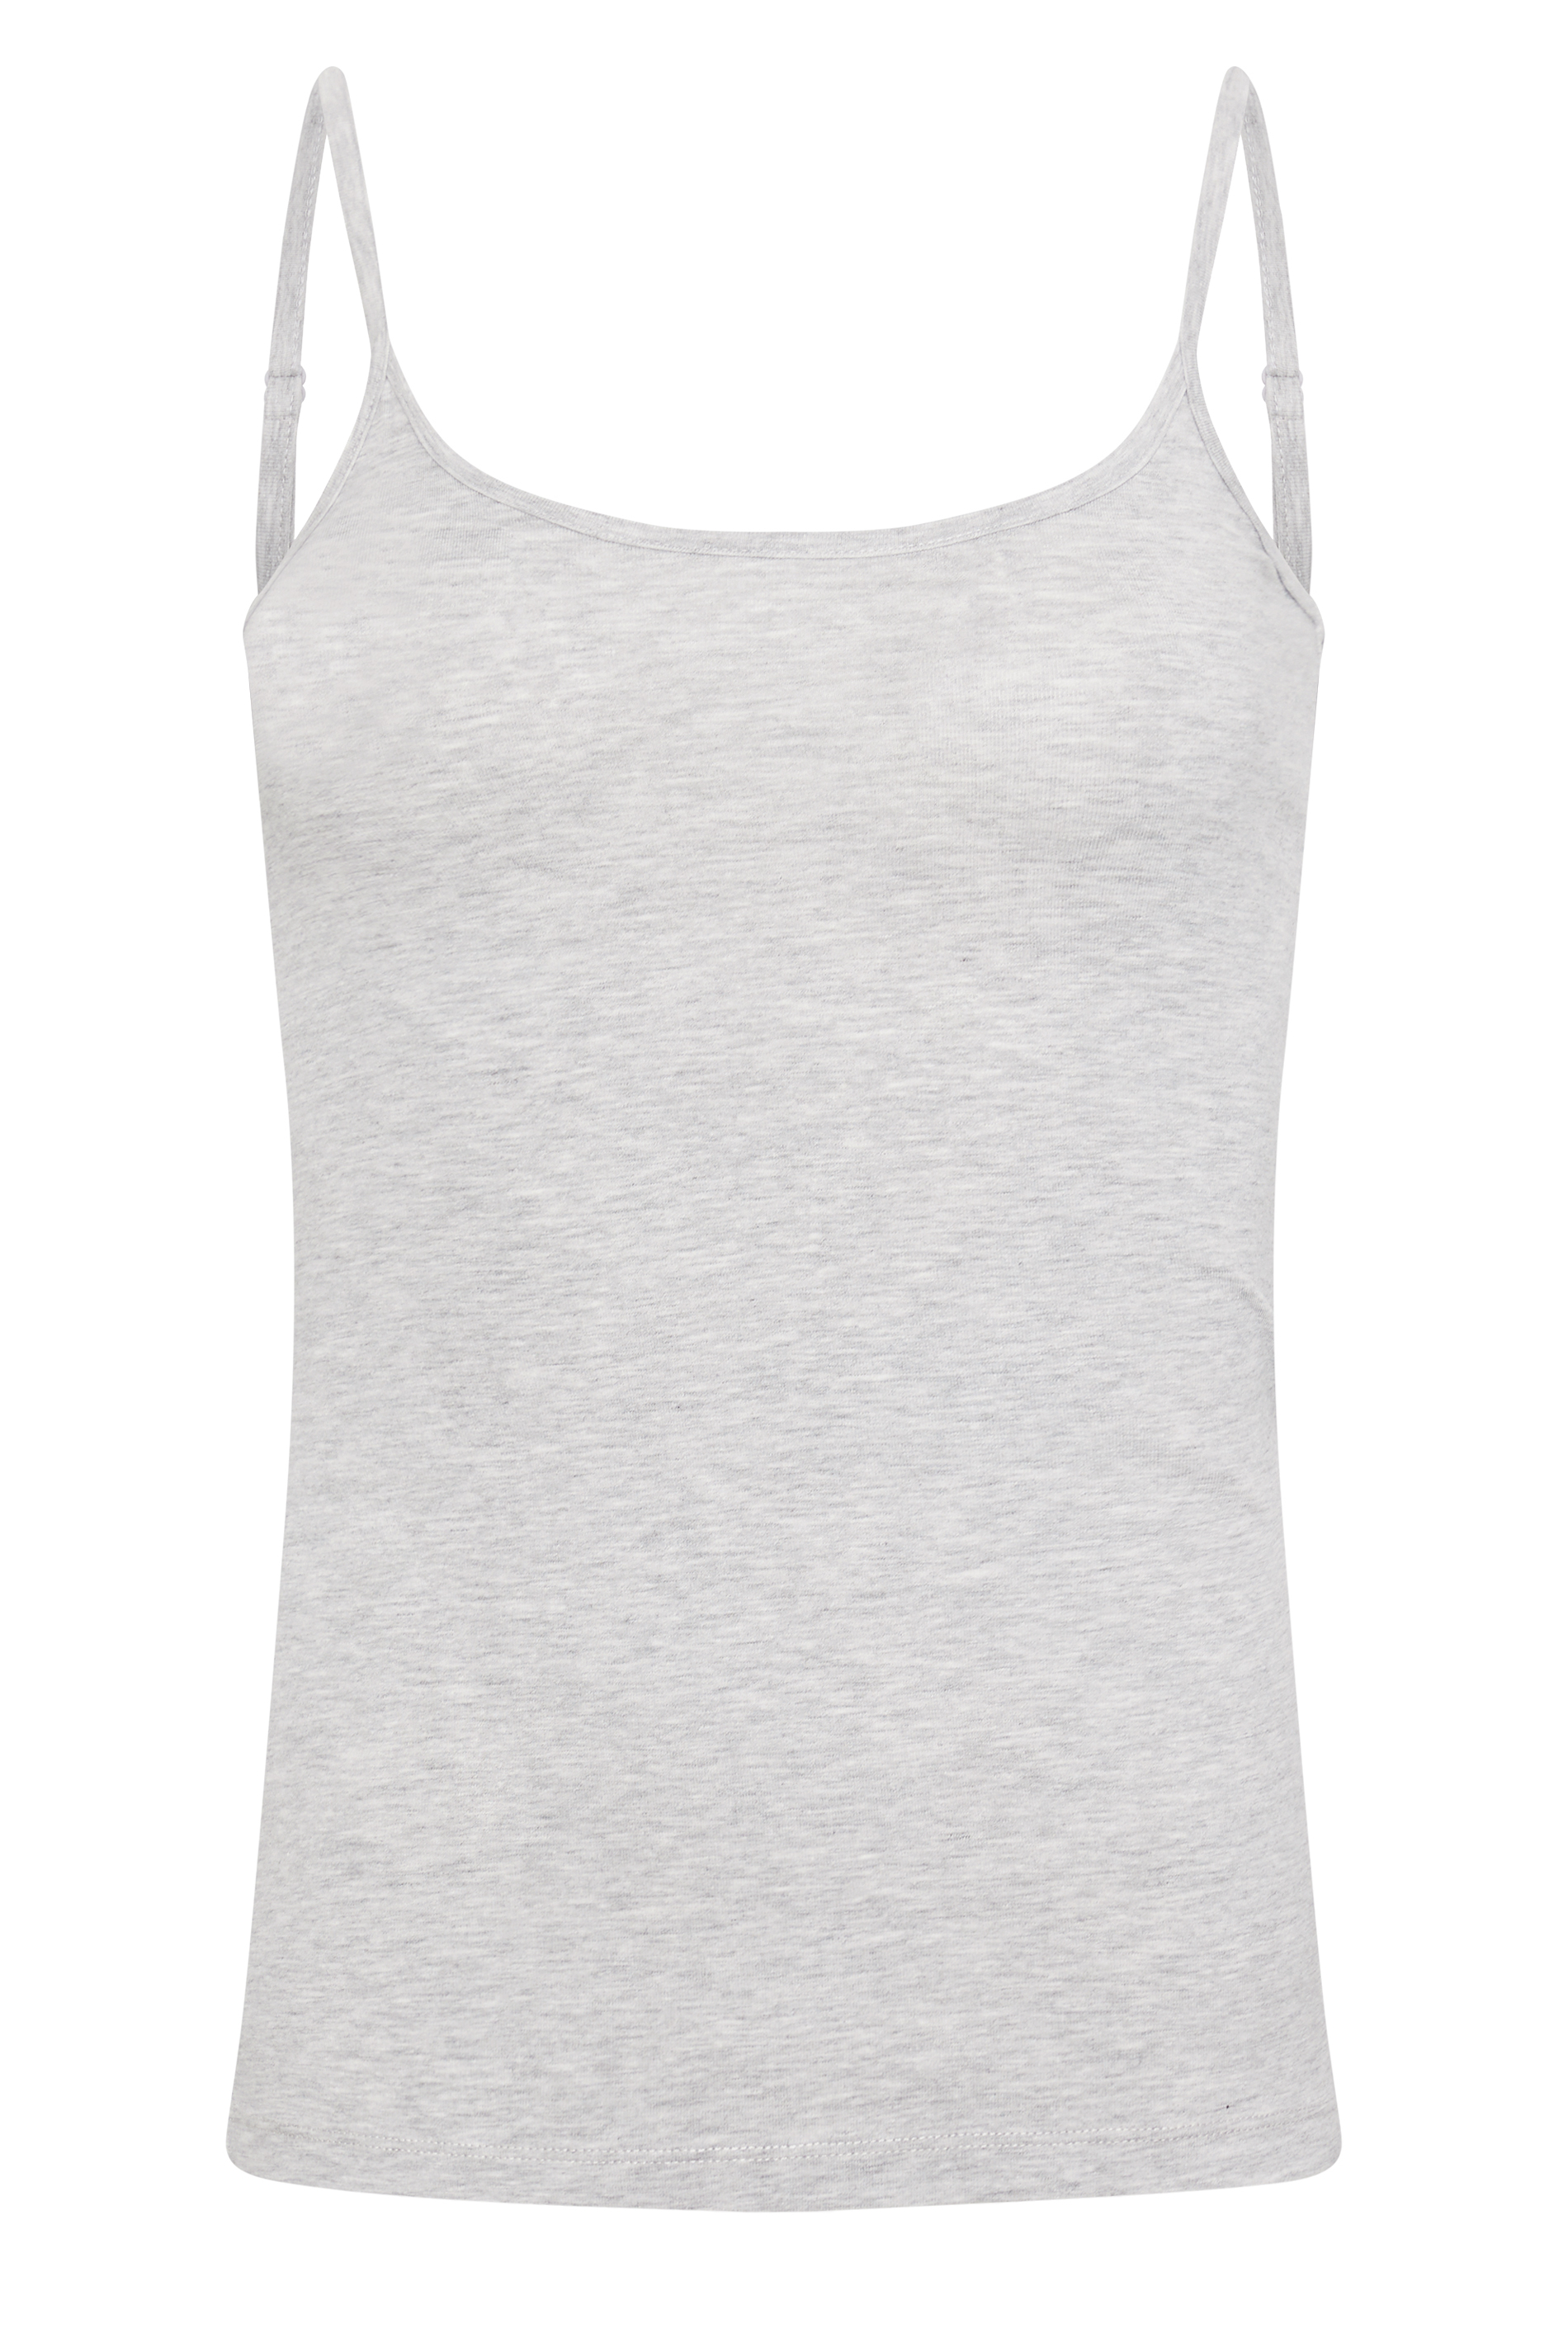 3 PACK Petite Black & White Cami Vest Tops | PixieGirl 3